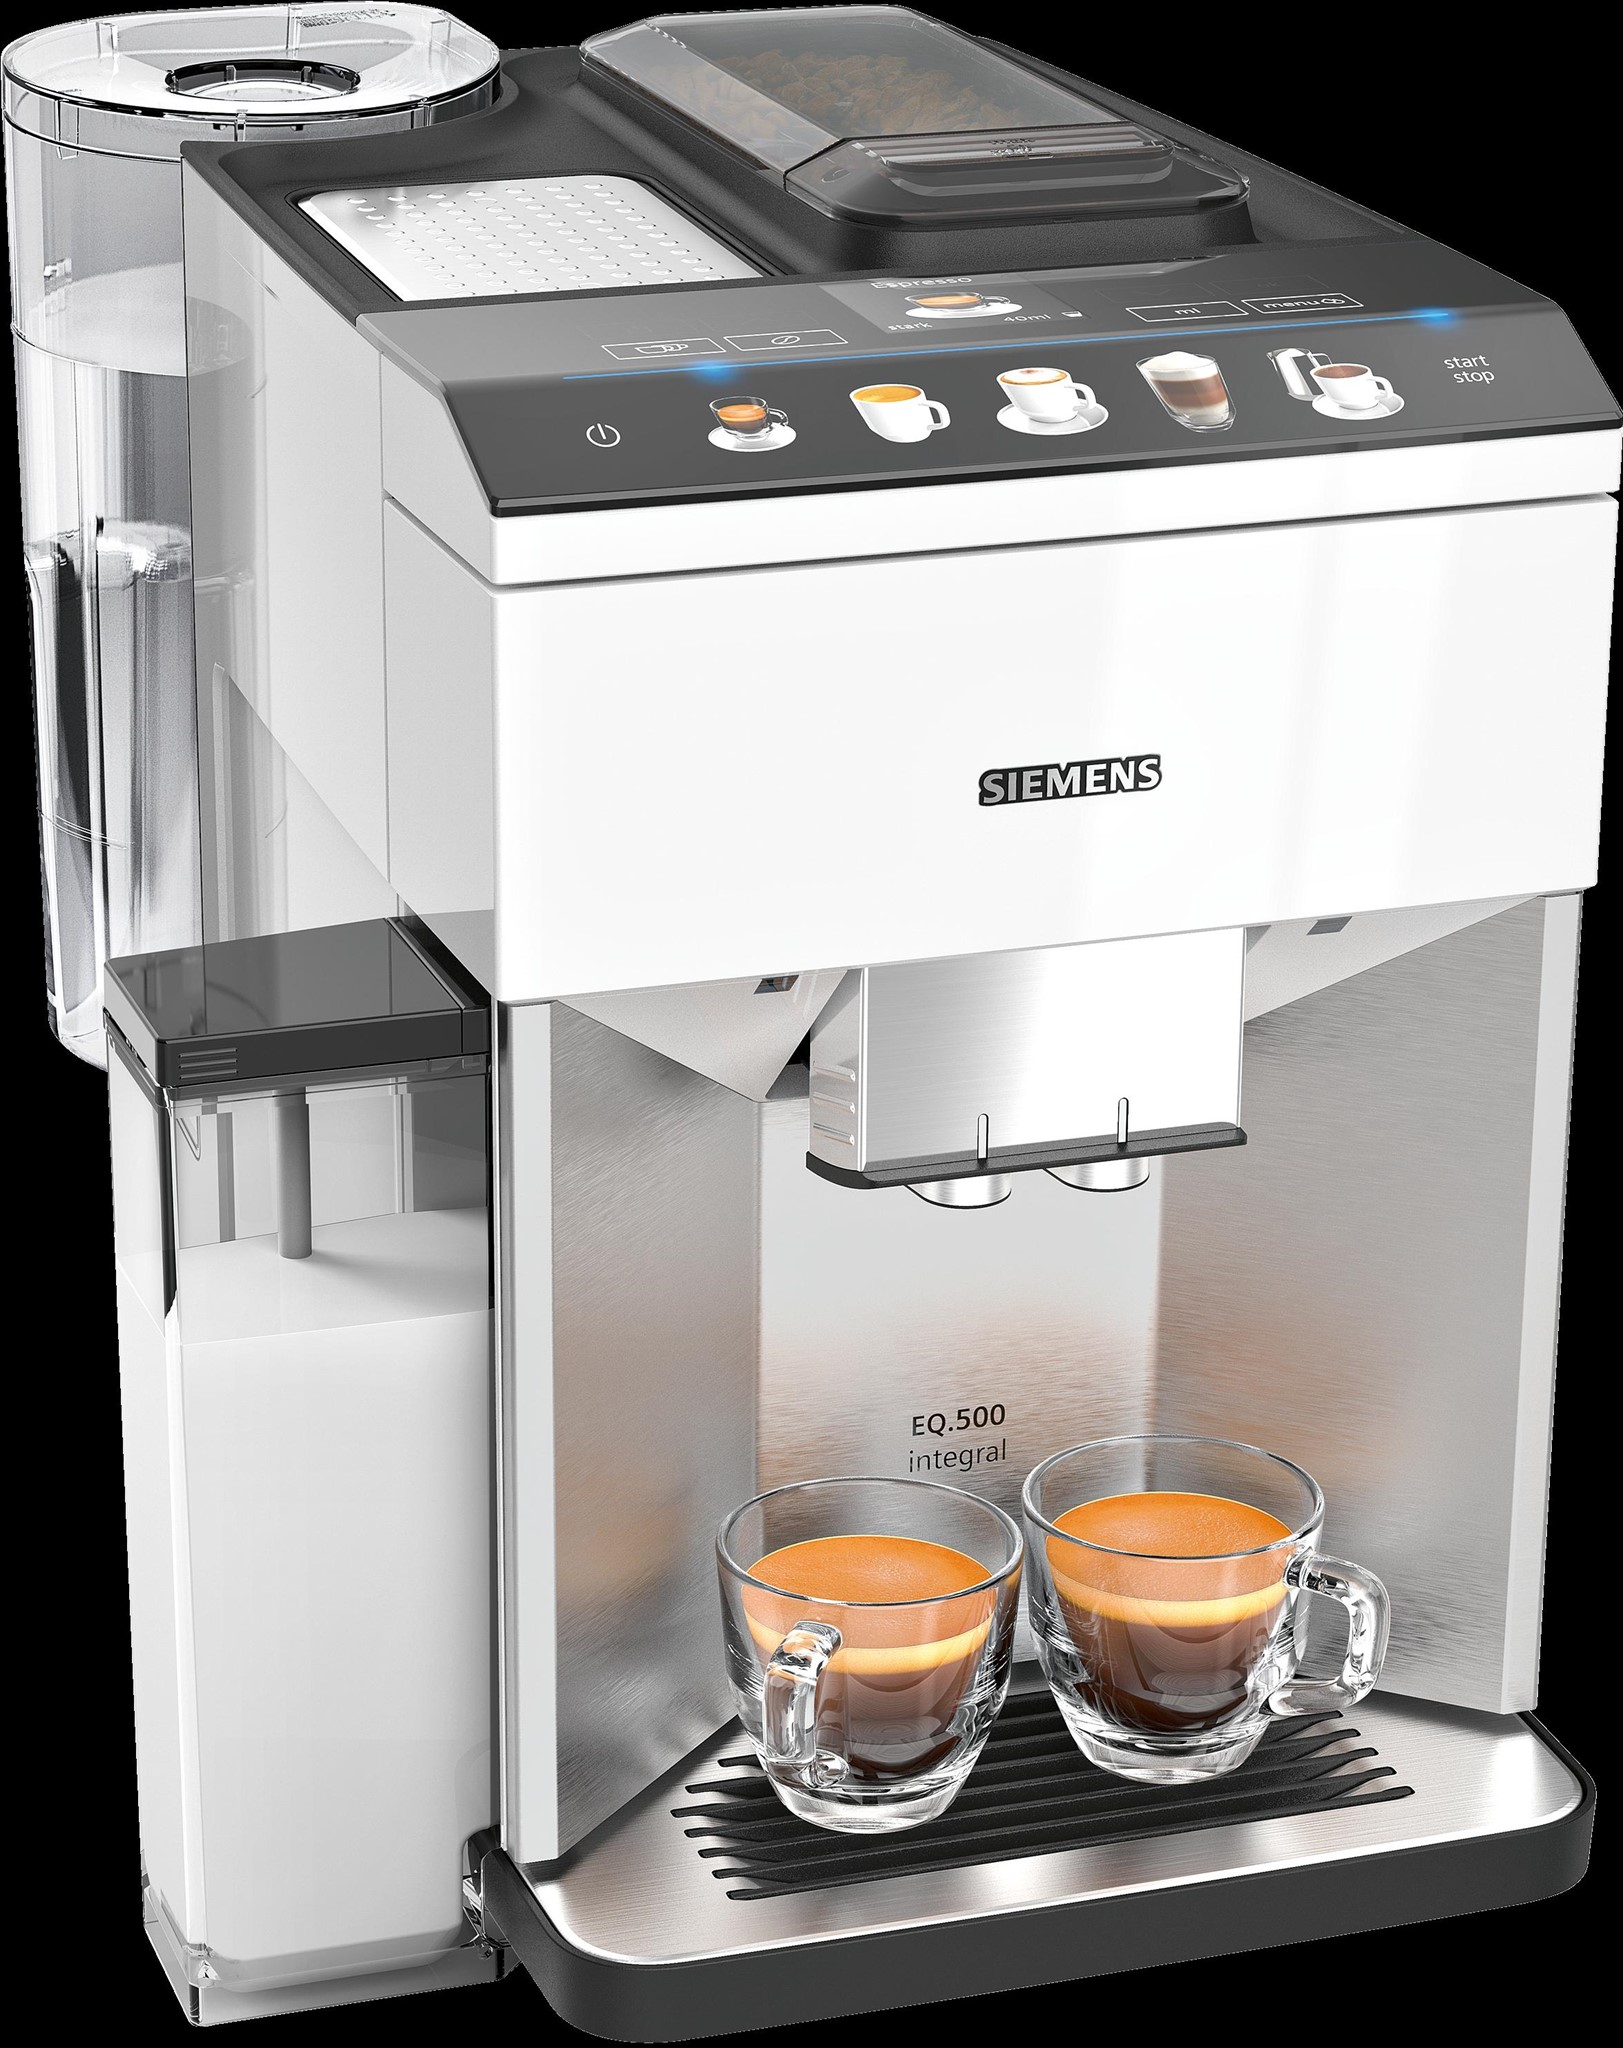 Siemens Kaffee-Vollautomat EQ.500 integral Edelstahl, TQ507D02,  4242003837467-Silvertech GmbH